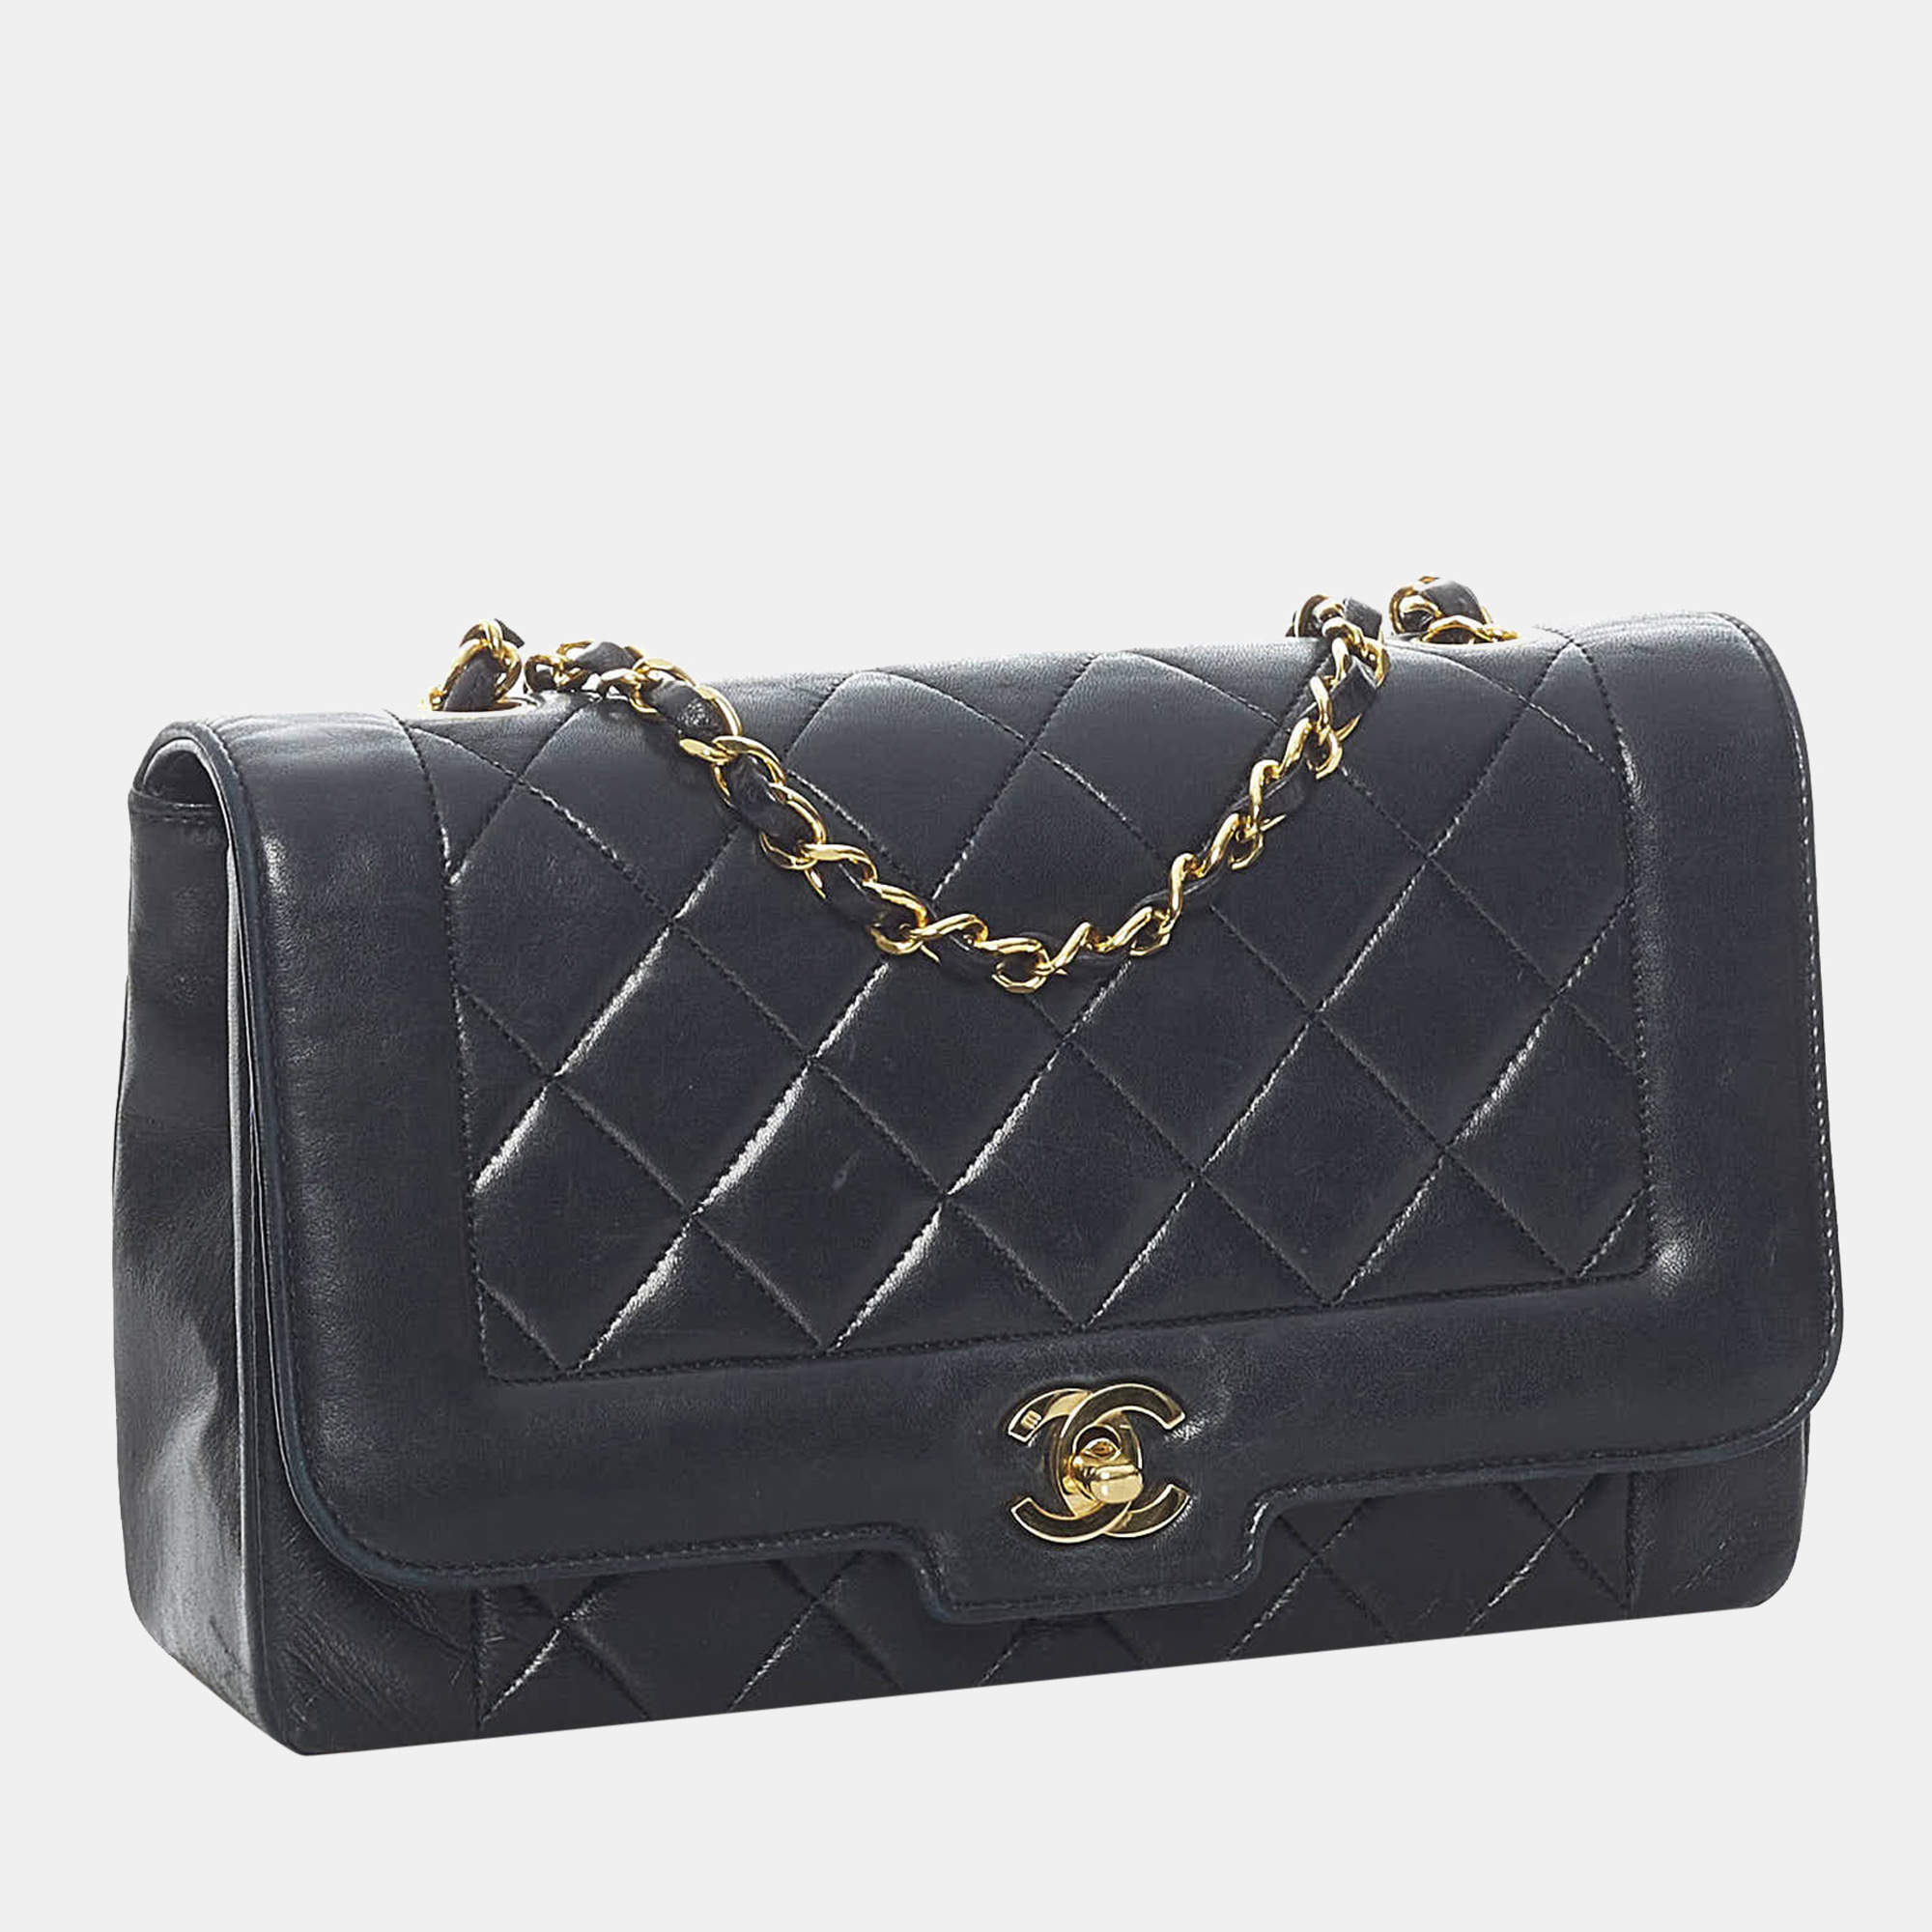 Chanel Black Medium Diana Flap Lambskin Leather Crossbody Bag Chanel